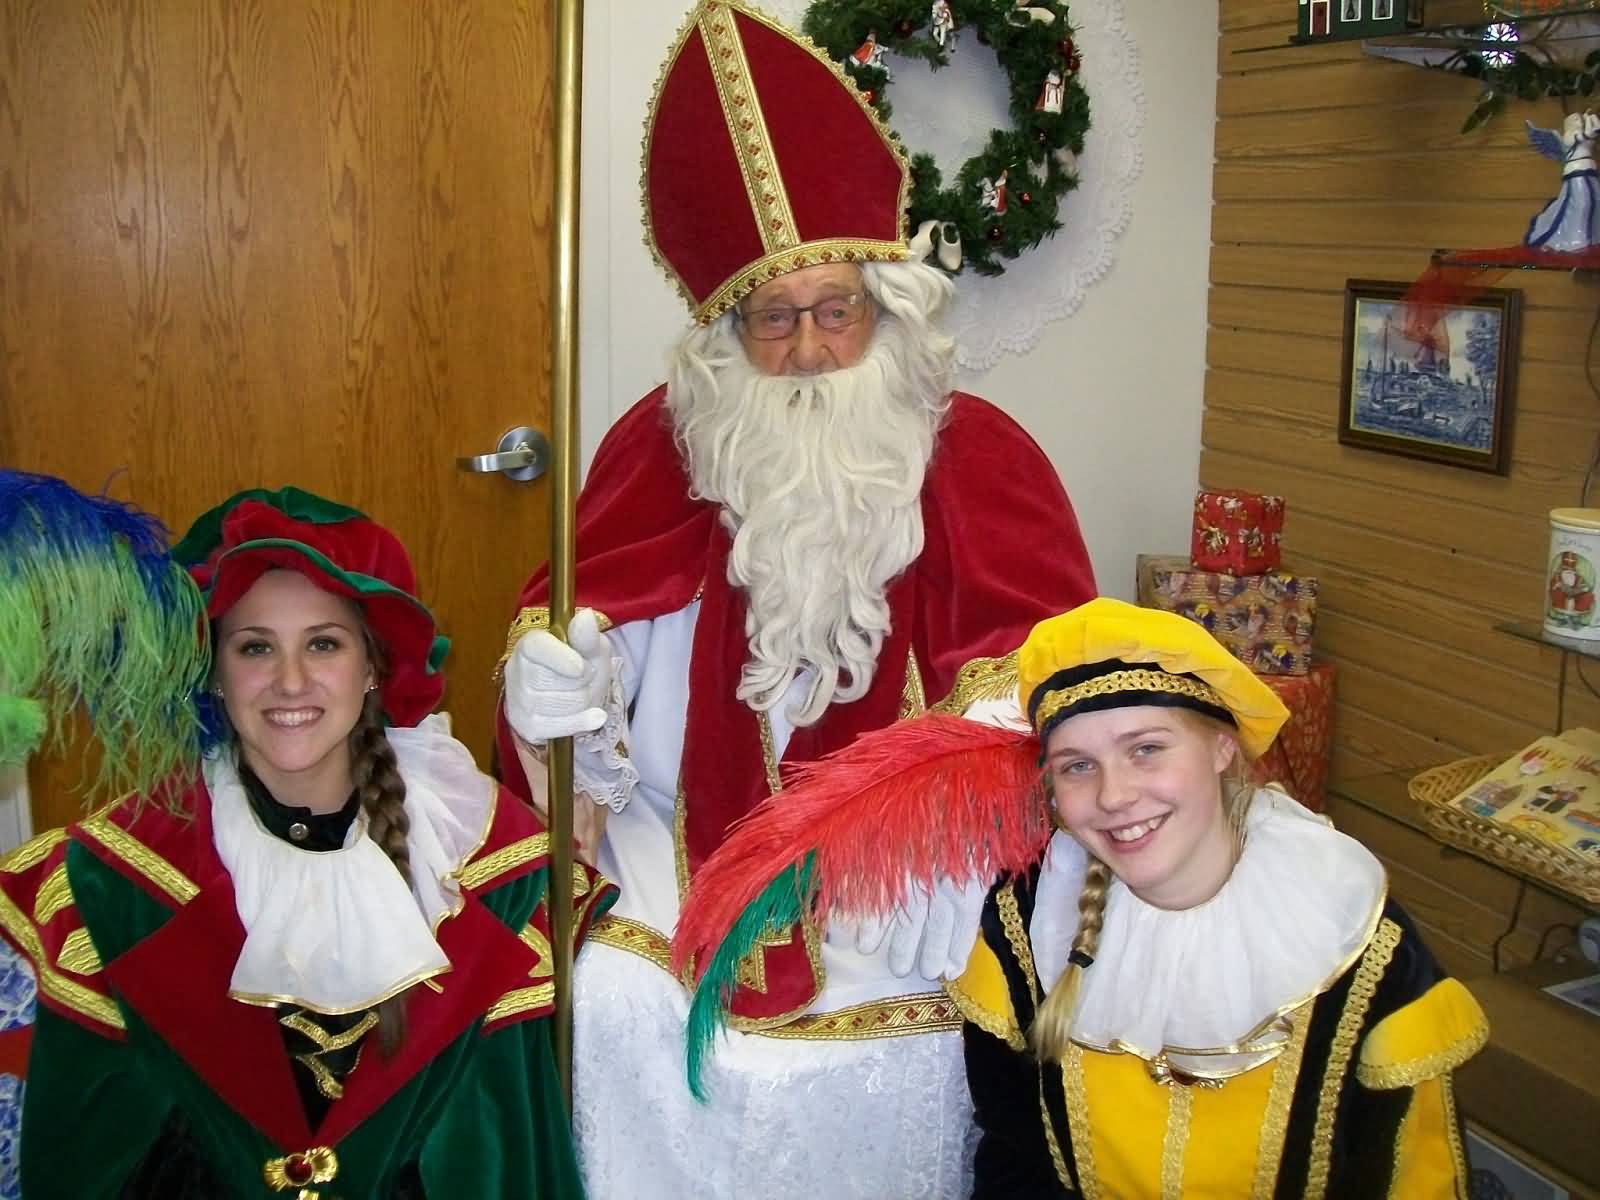 St. Nicholas Day Celebration Girls With Santa Claus